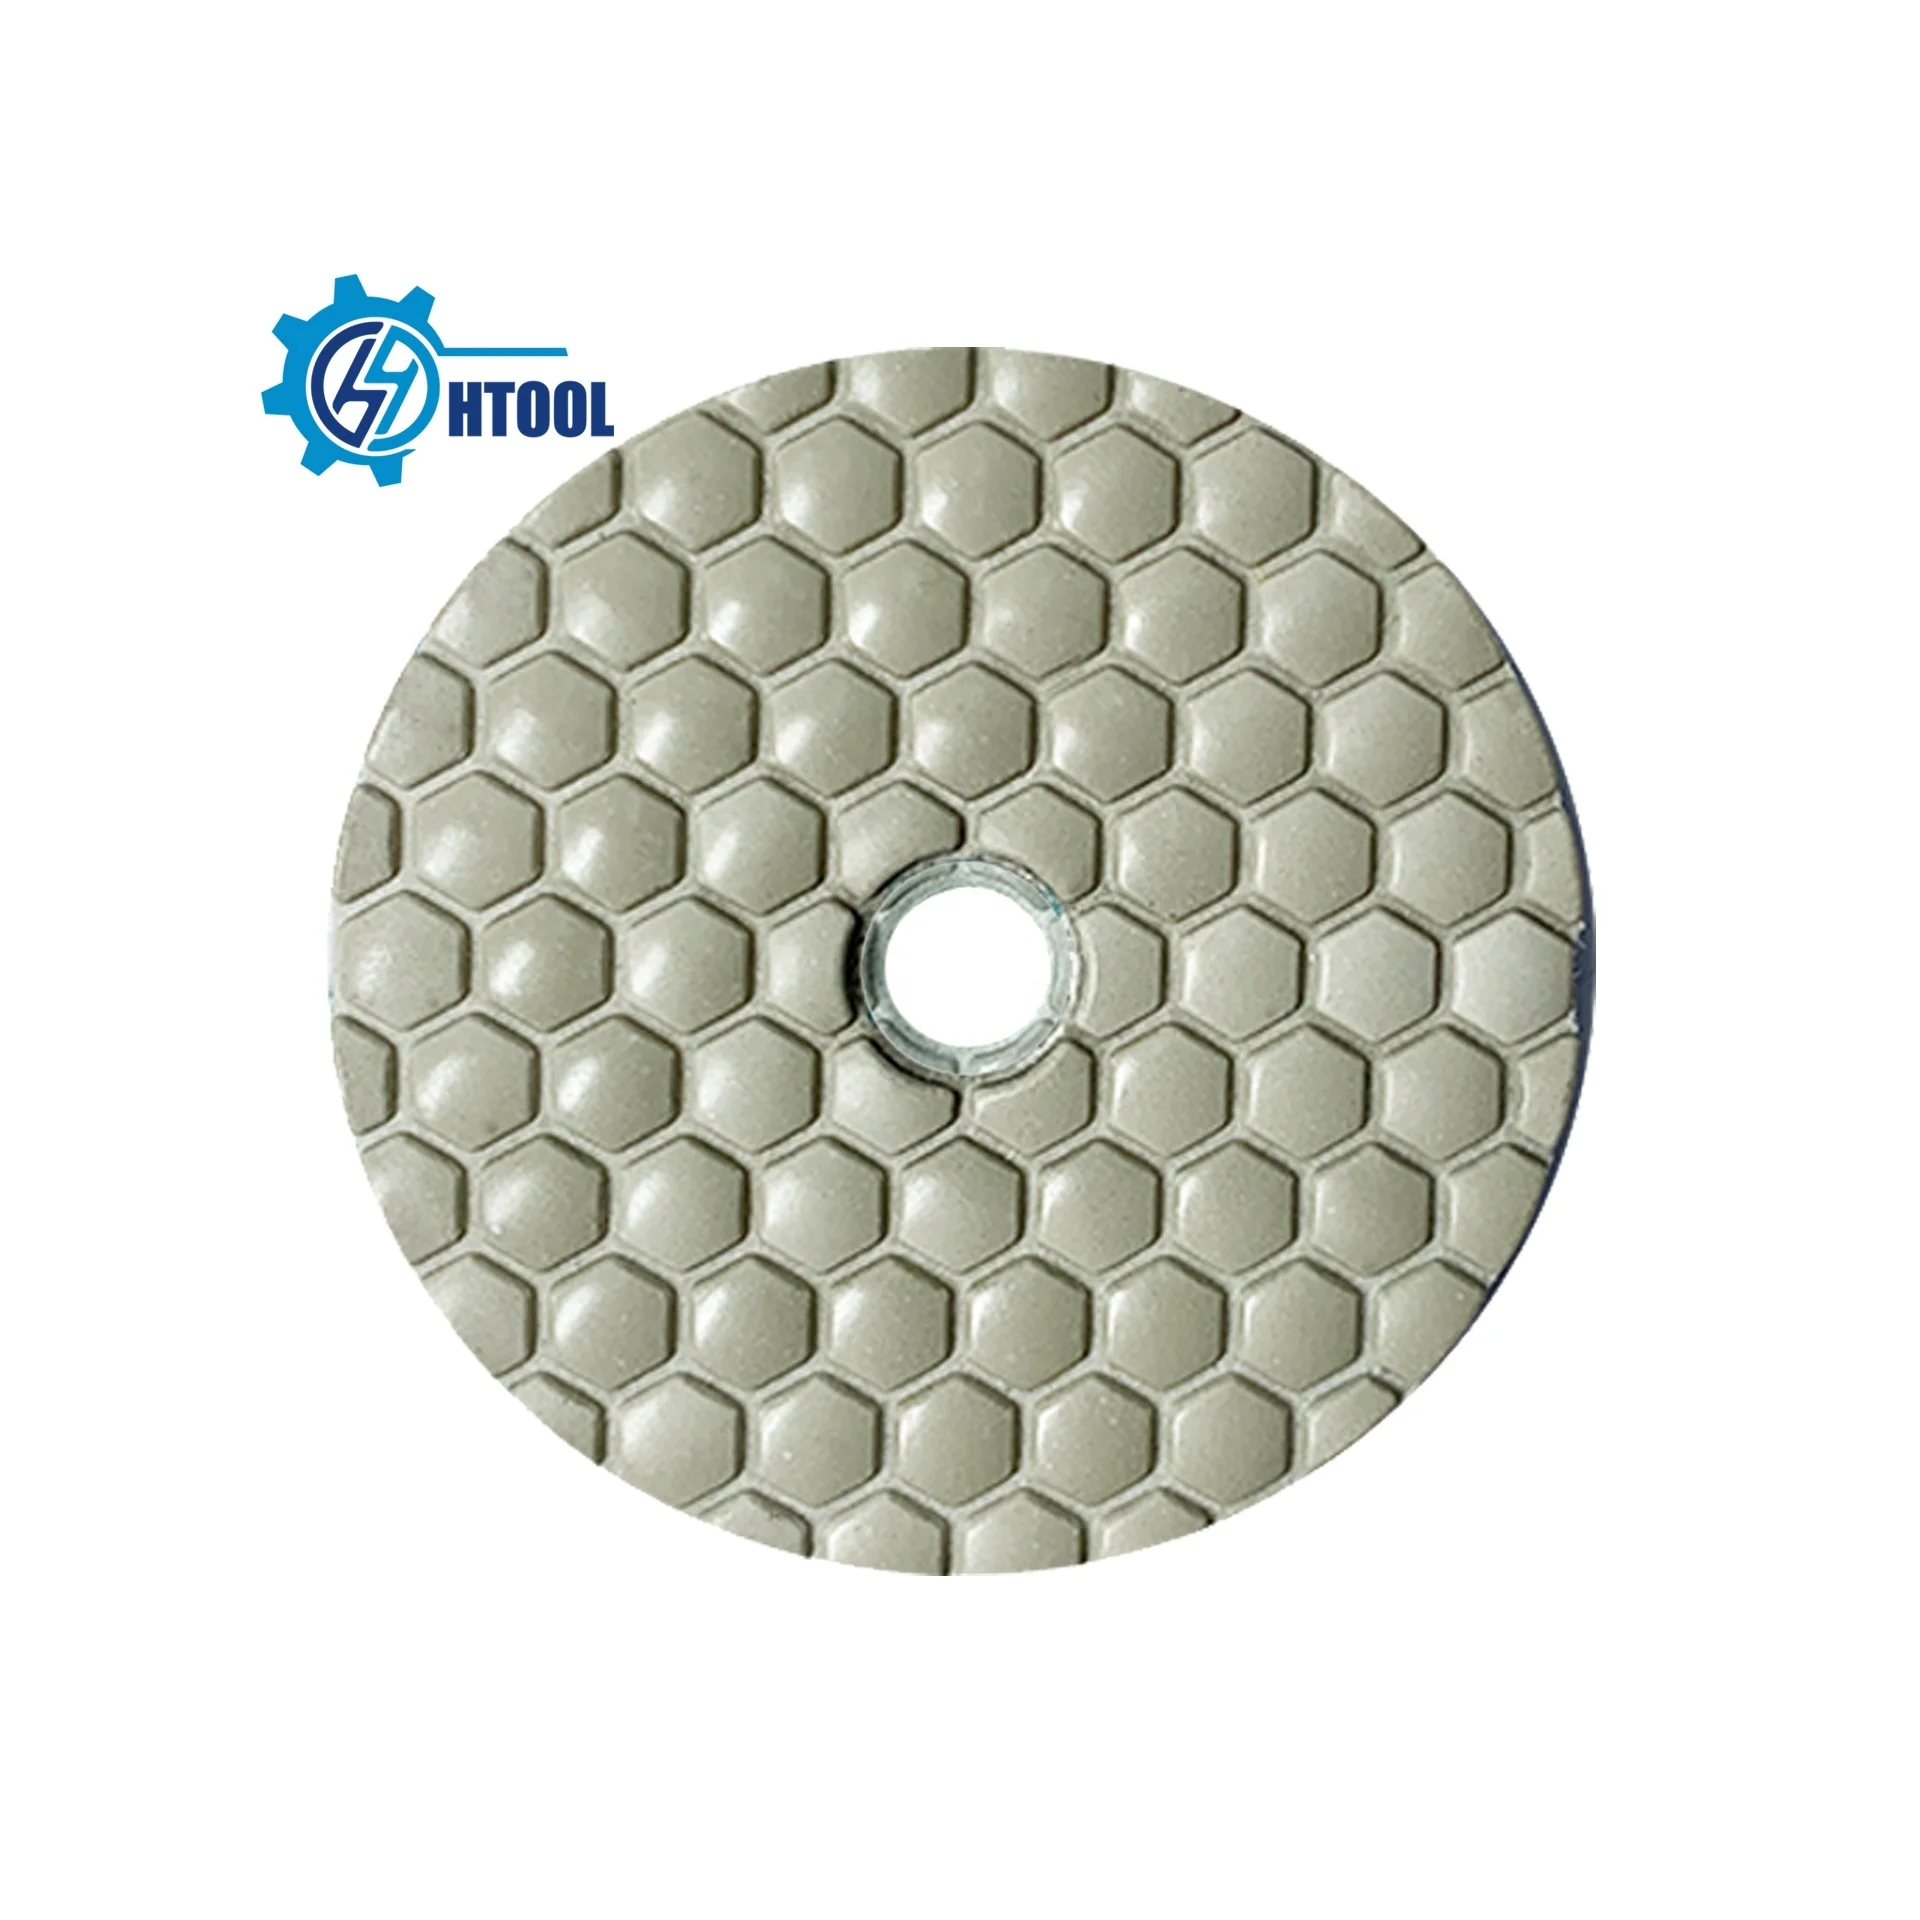 

Htool 4inch 100mm Polishing Pads Stone Polishing Pad for Granite Marble Artificial Stone Concrete